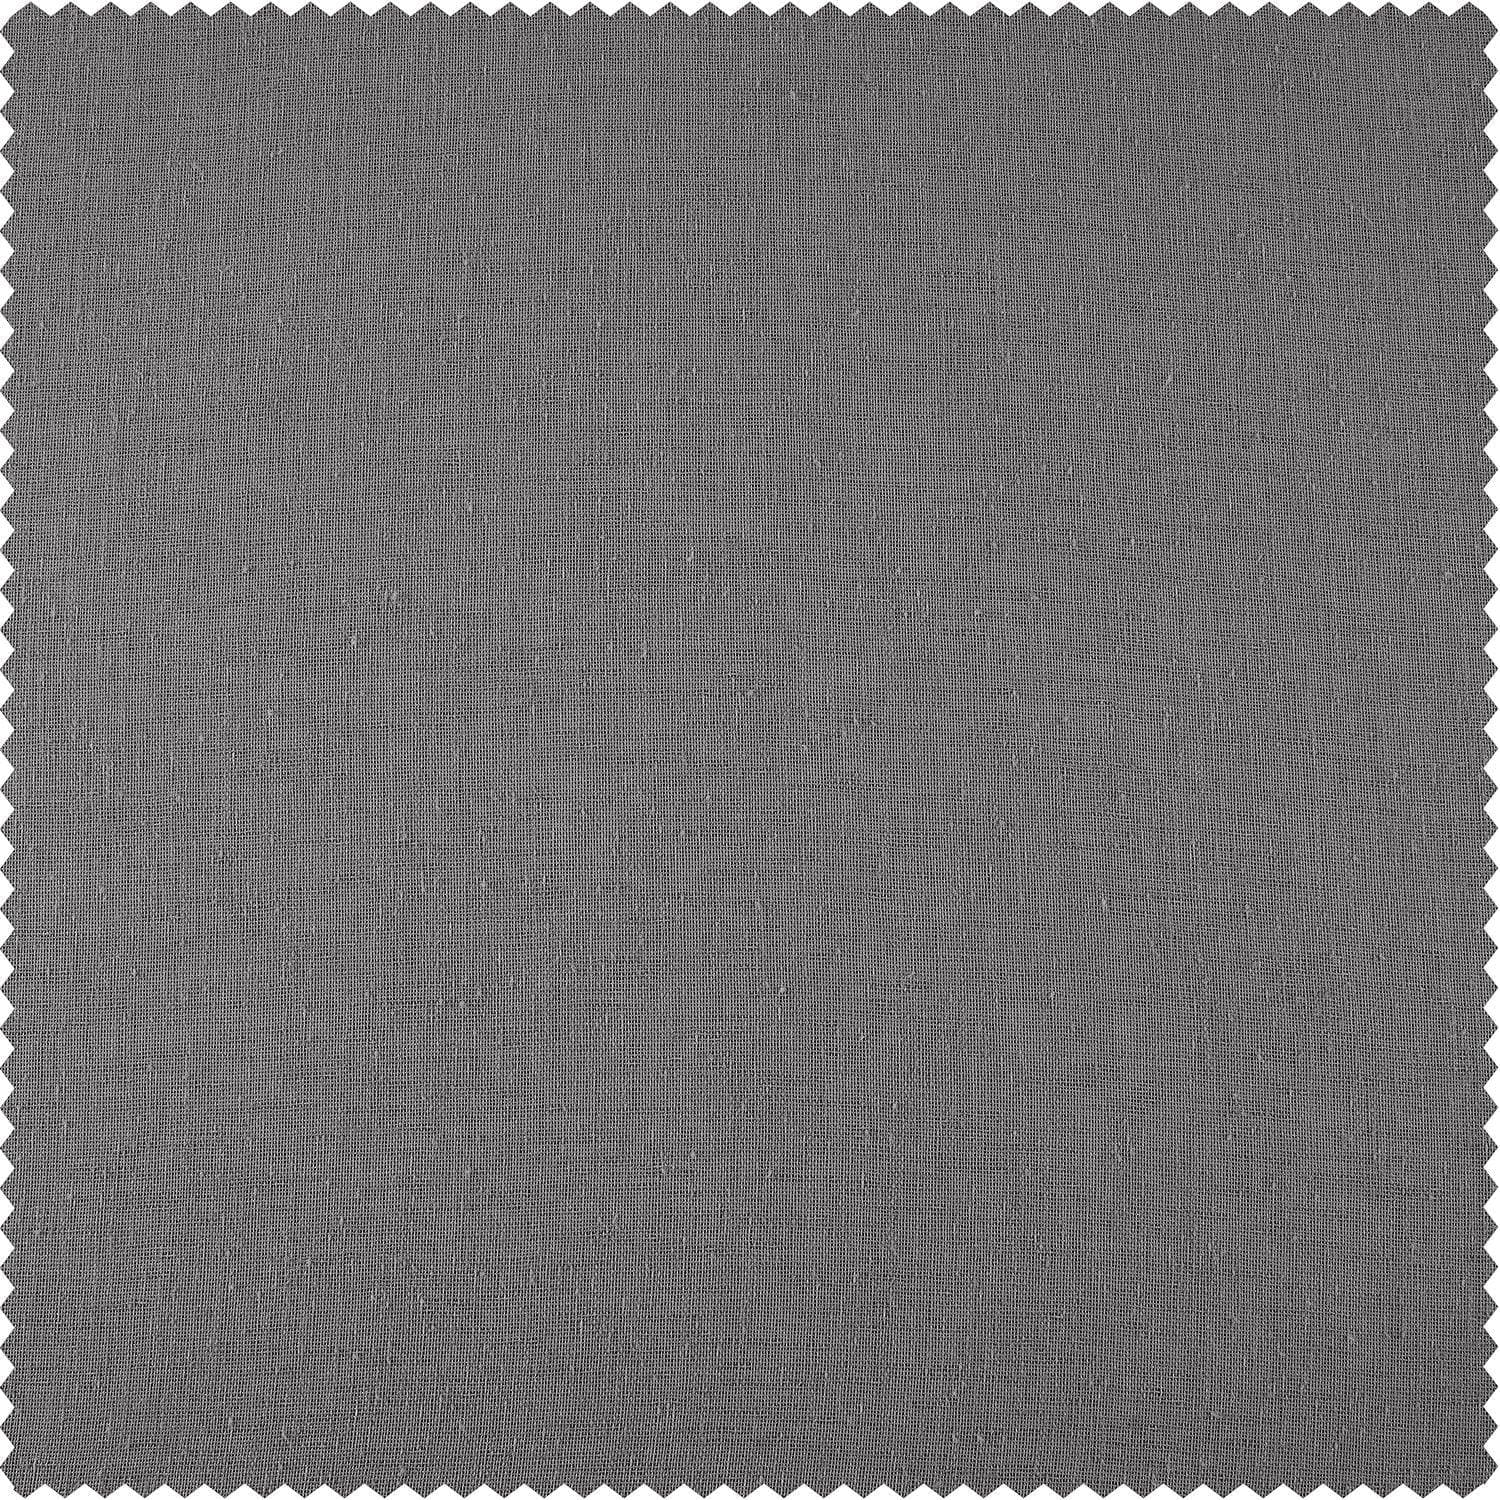 Nimbo Grey Solid Linen Sheer Curtain Pair (2 Panels)